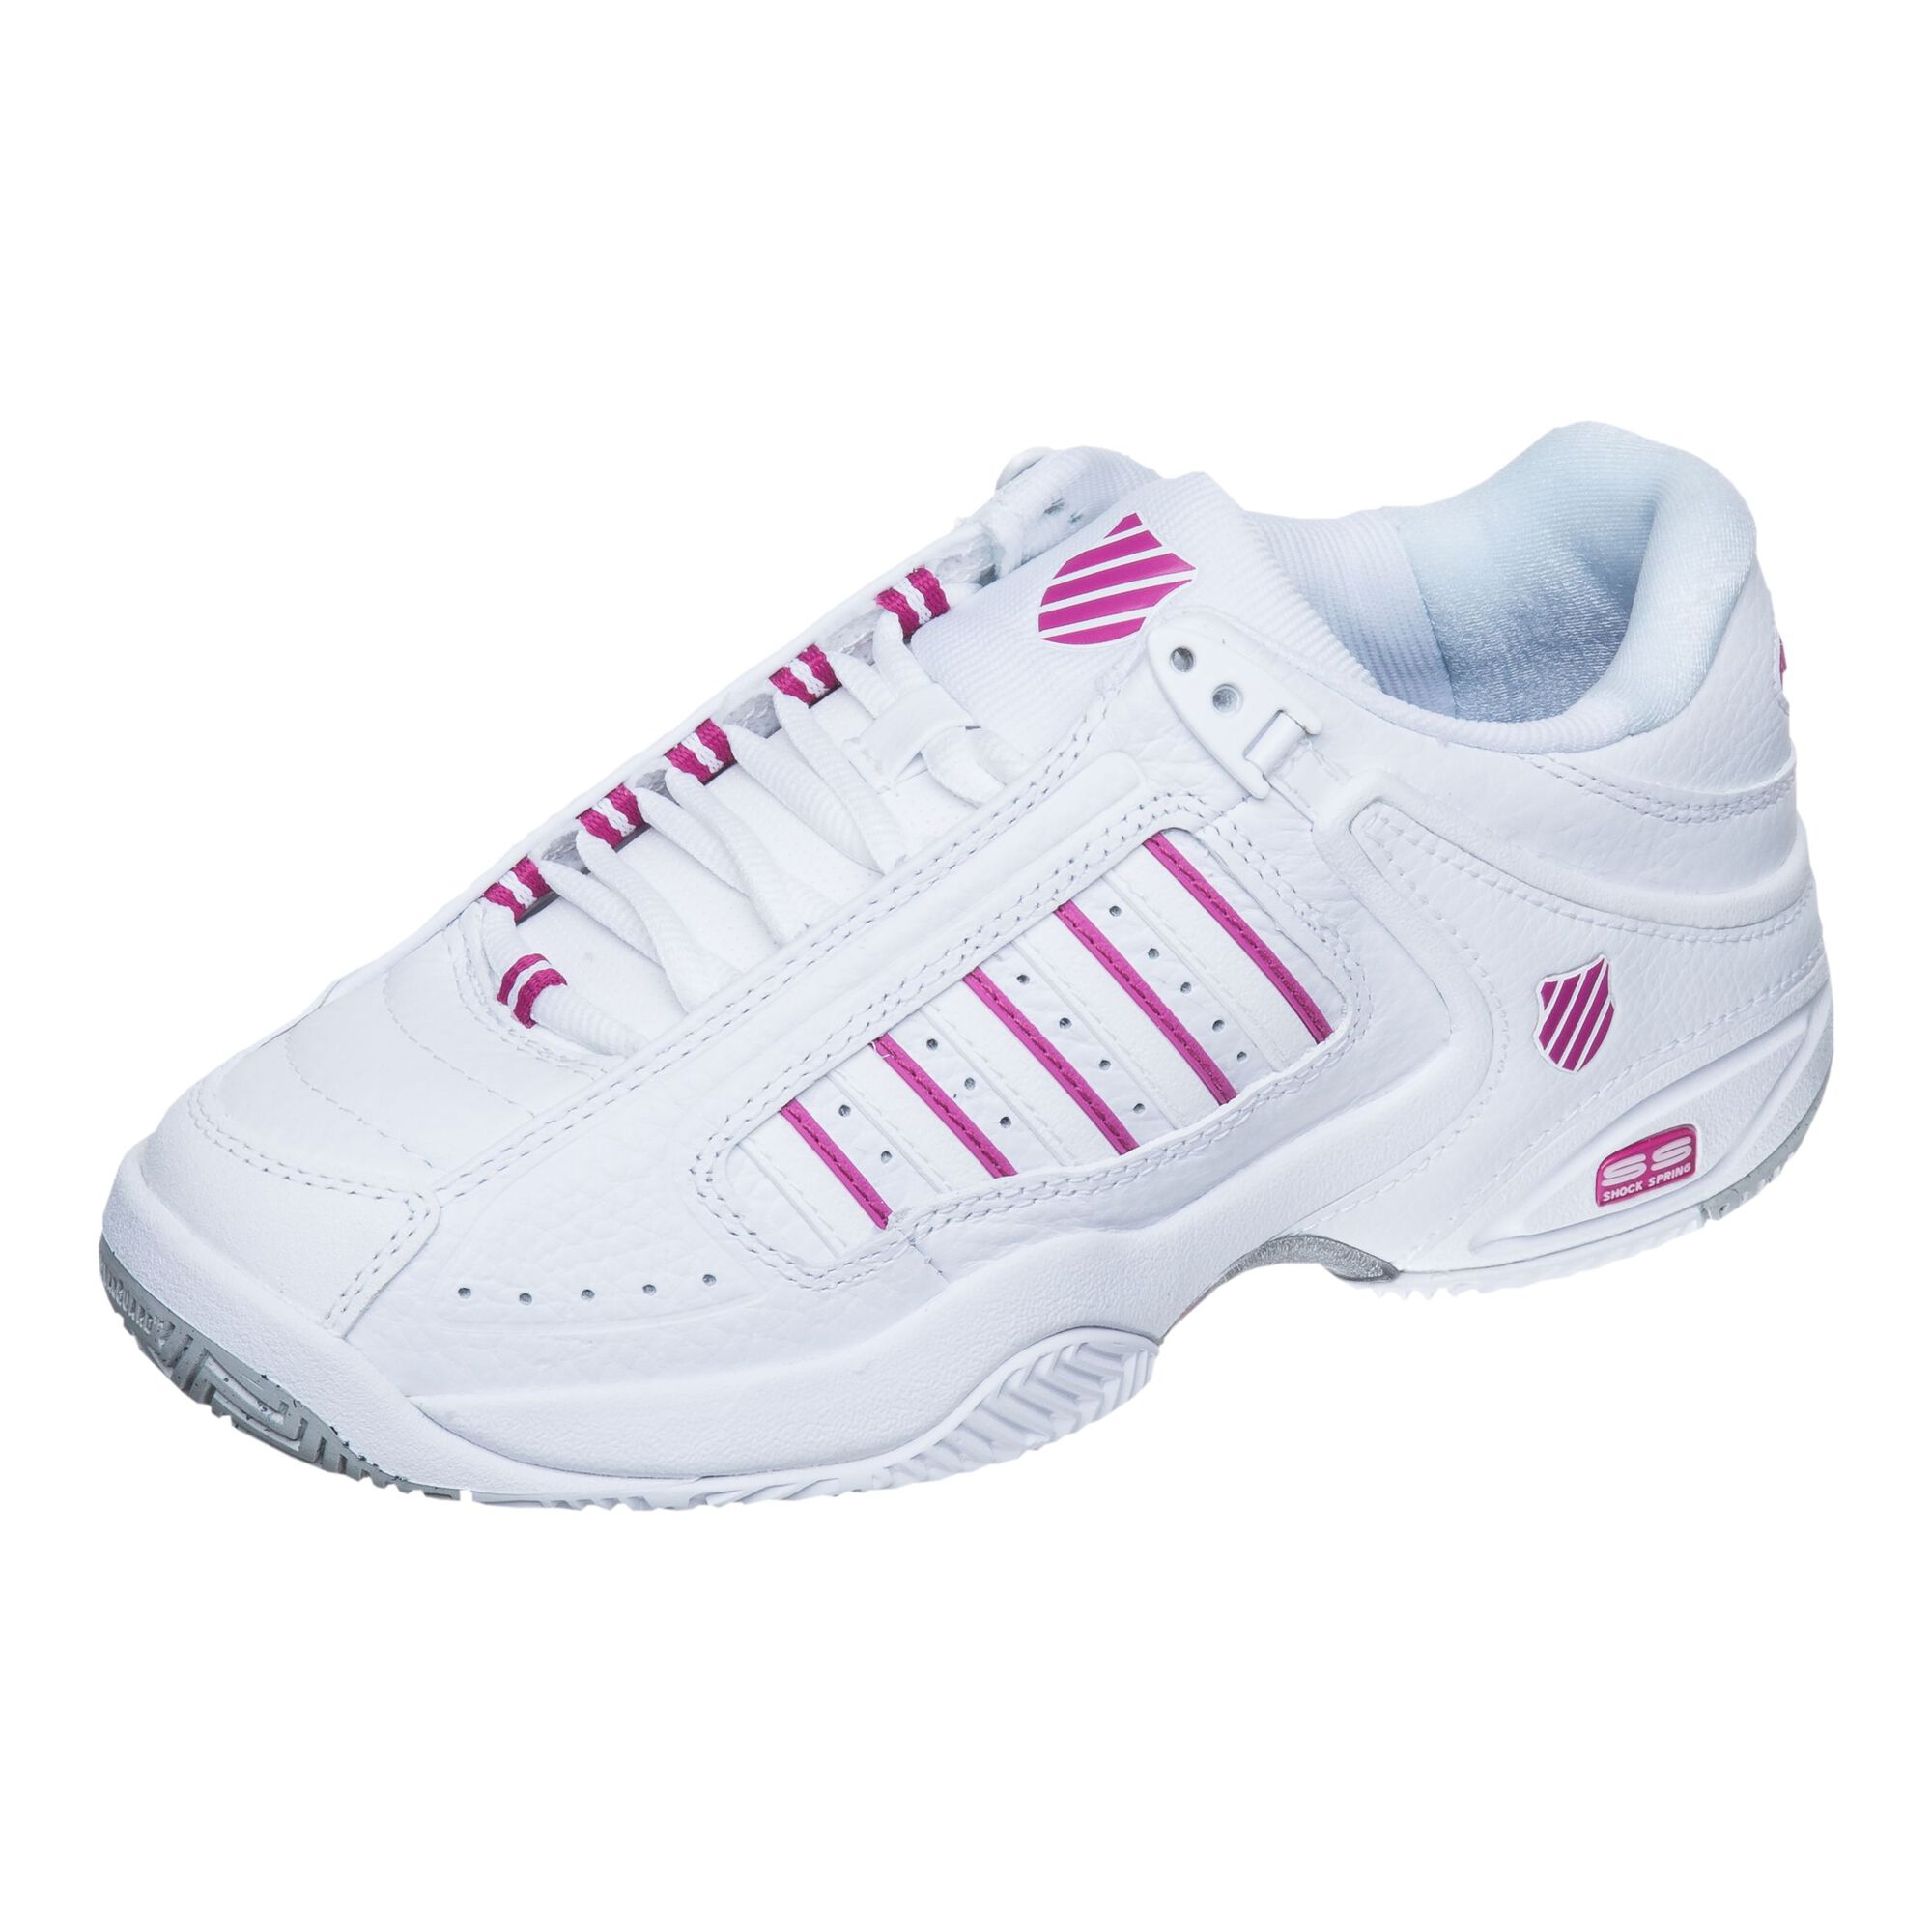 Christian circulatie Gang buy K-Swiss Defier RS All Court Shoe Women - White, Violet online | Tennis -Point